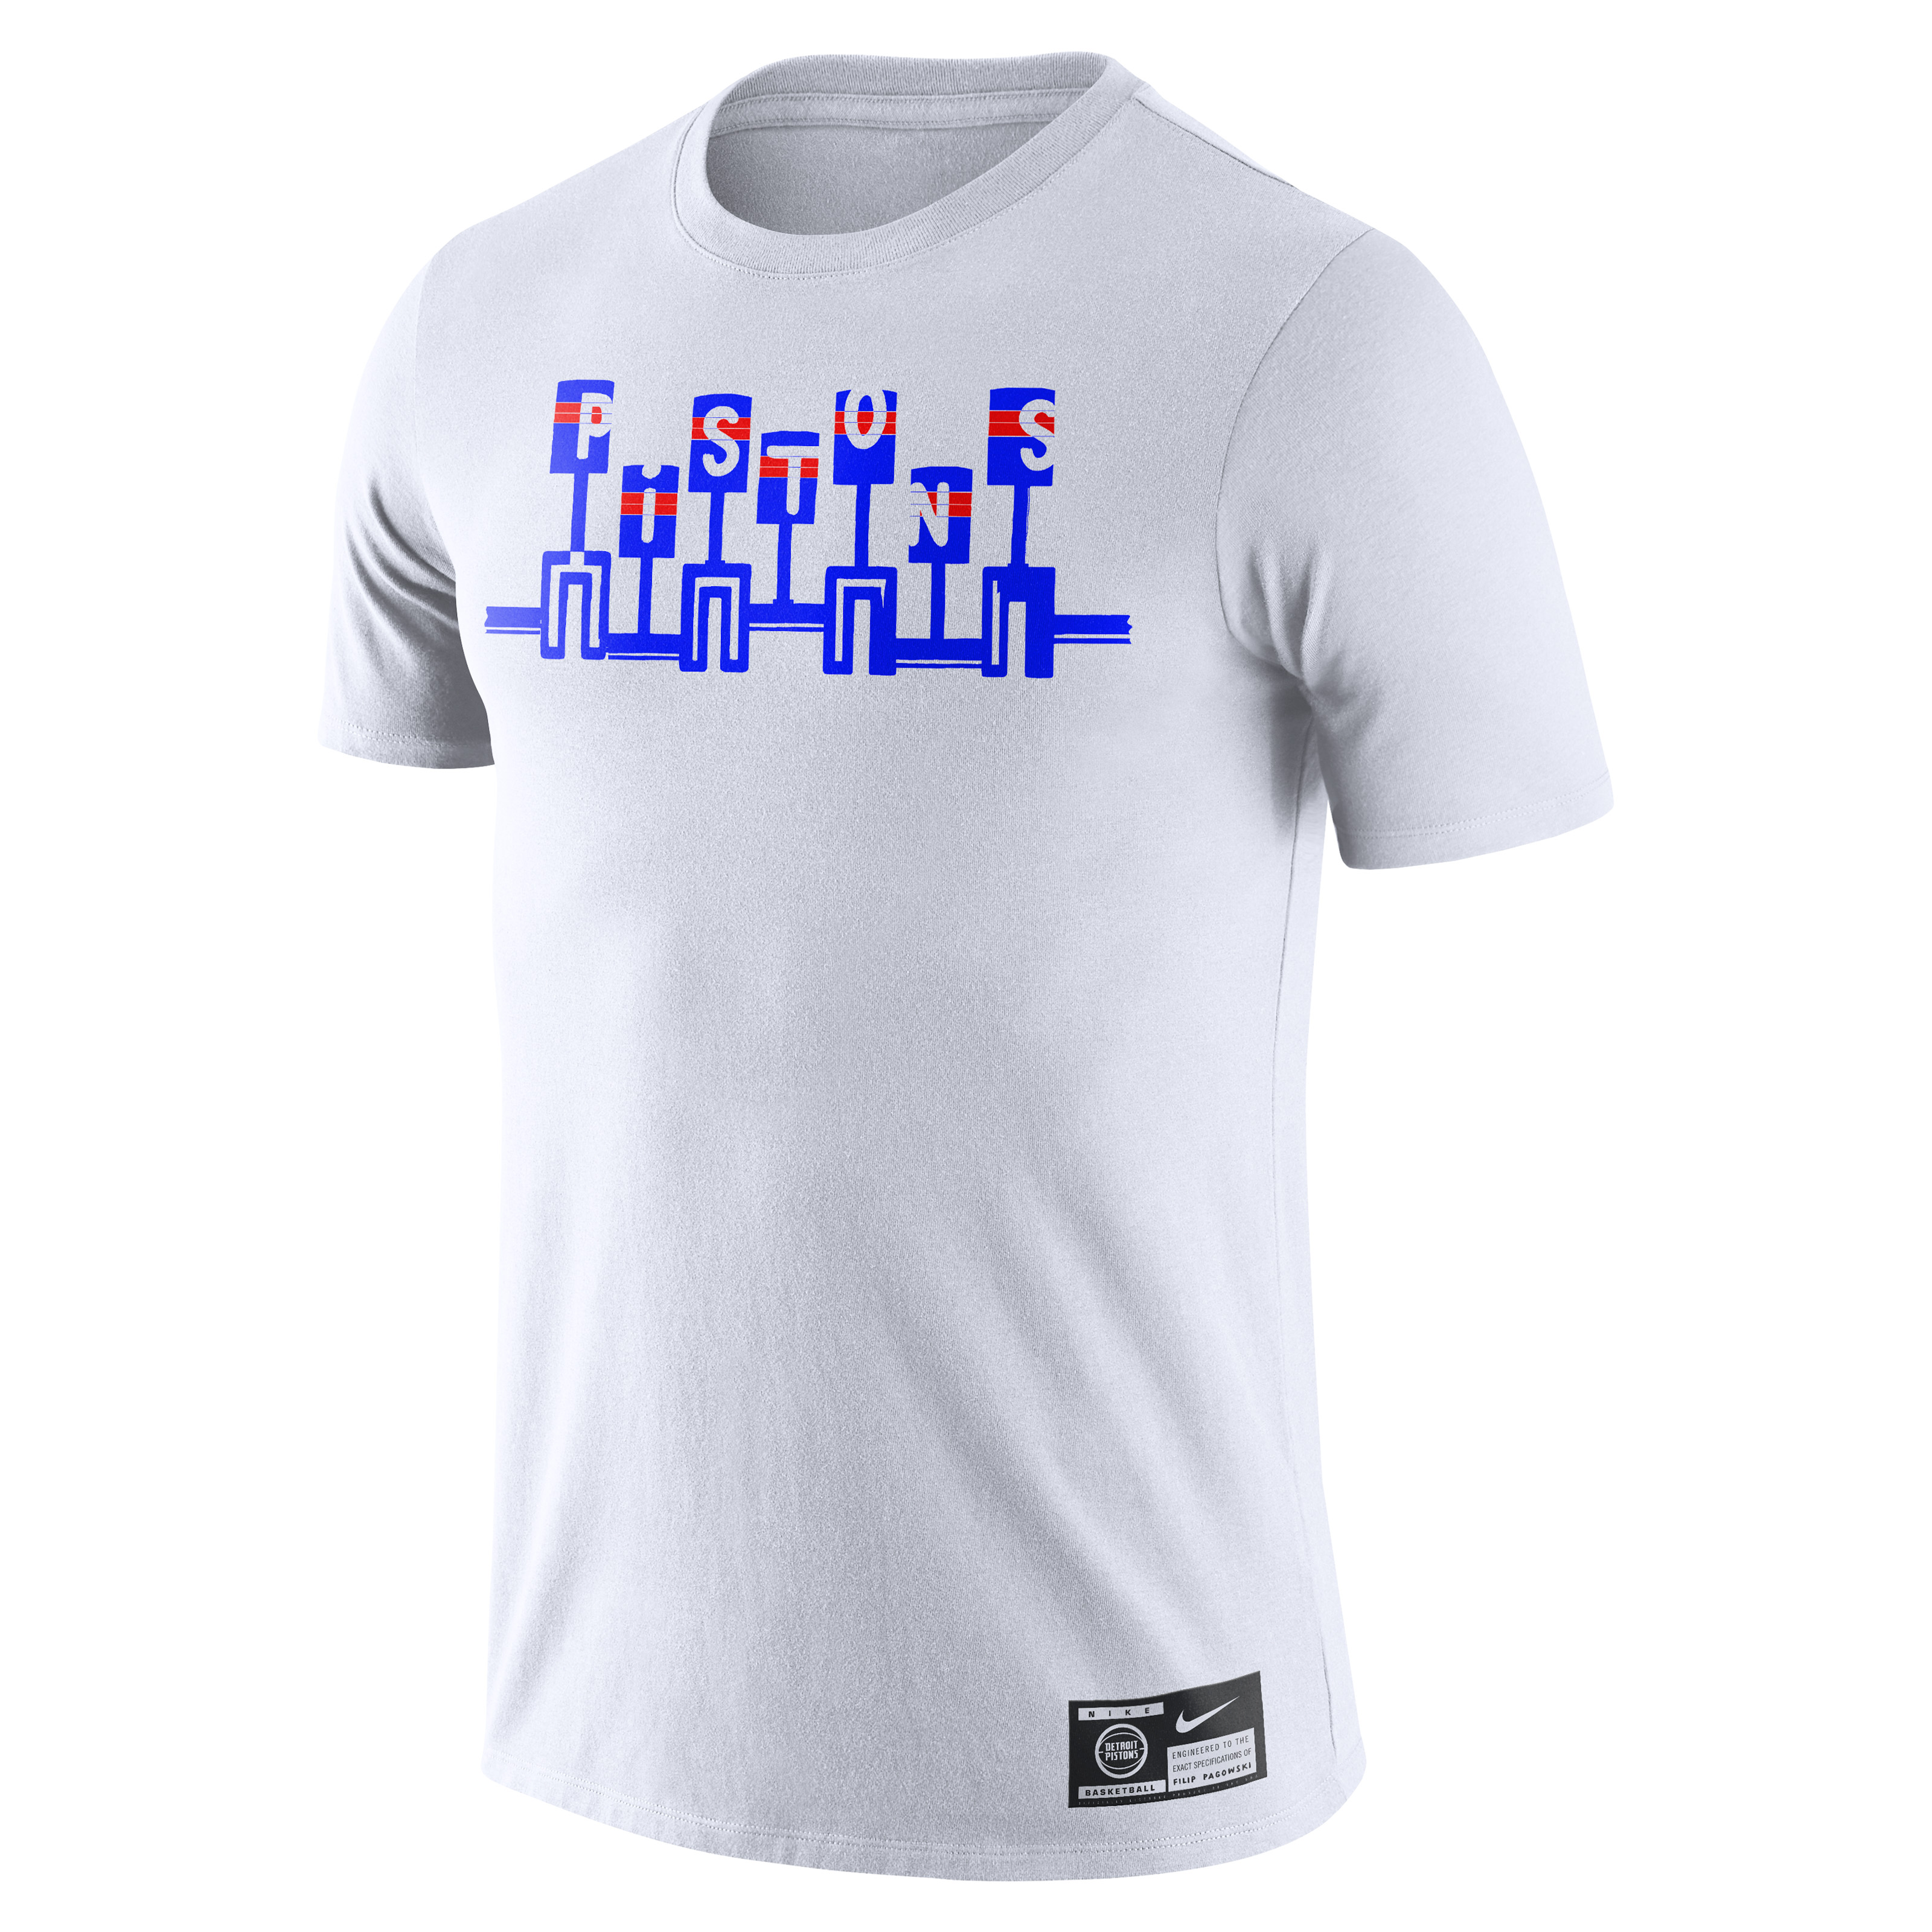 Filip Pagowski Nike T shirt &#x27;Detroit Pistons&#x27;